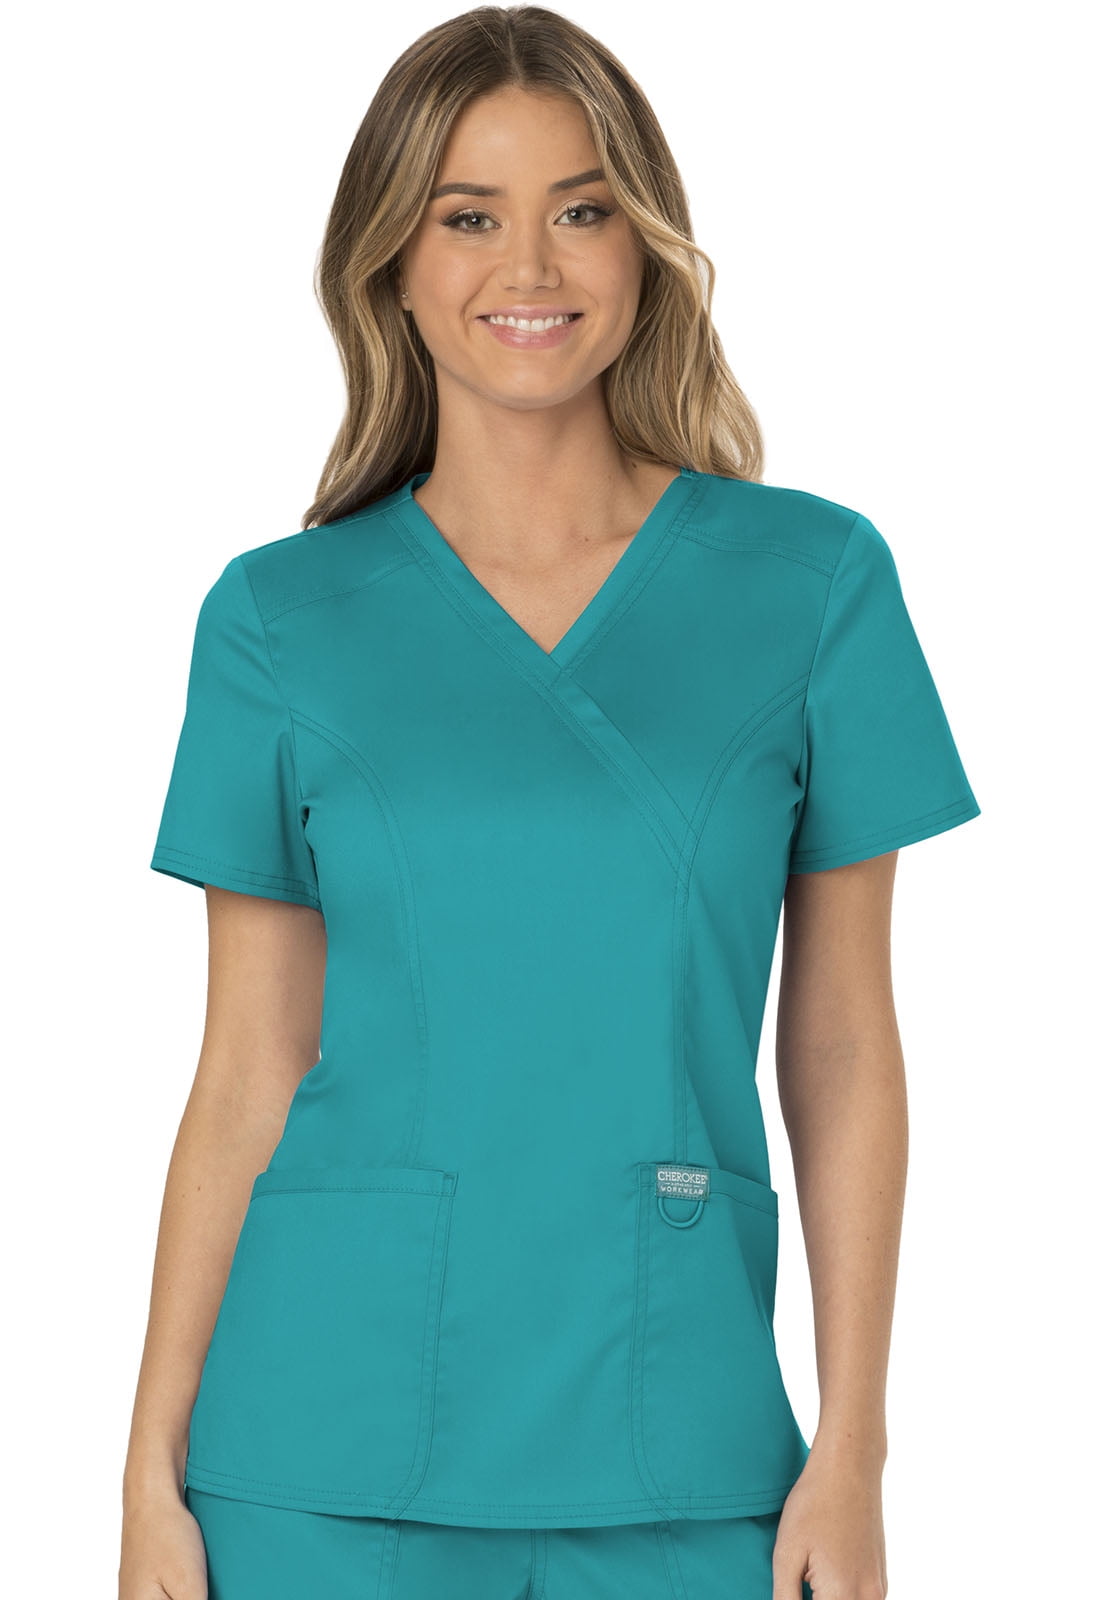 TREEP Women Working Suit Short Sleeve Nurses Work Uniform Christmas V-Neck Tops Holiday Blouse Healthcare Workwear Uniform